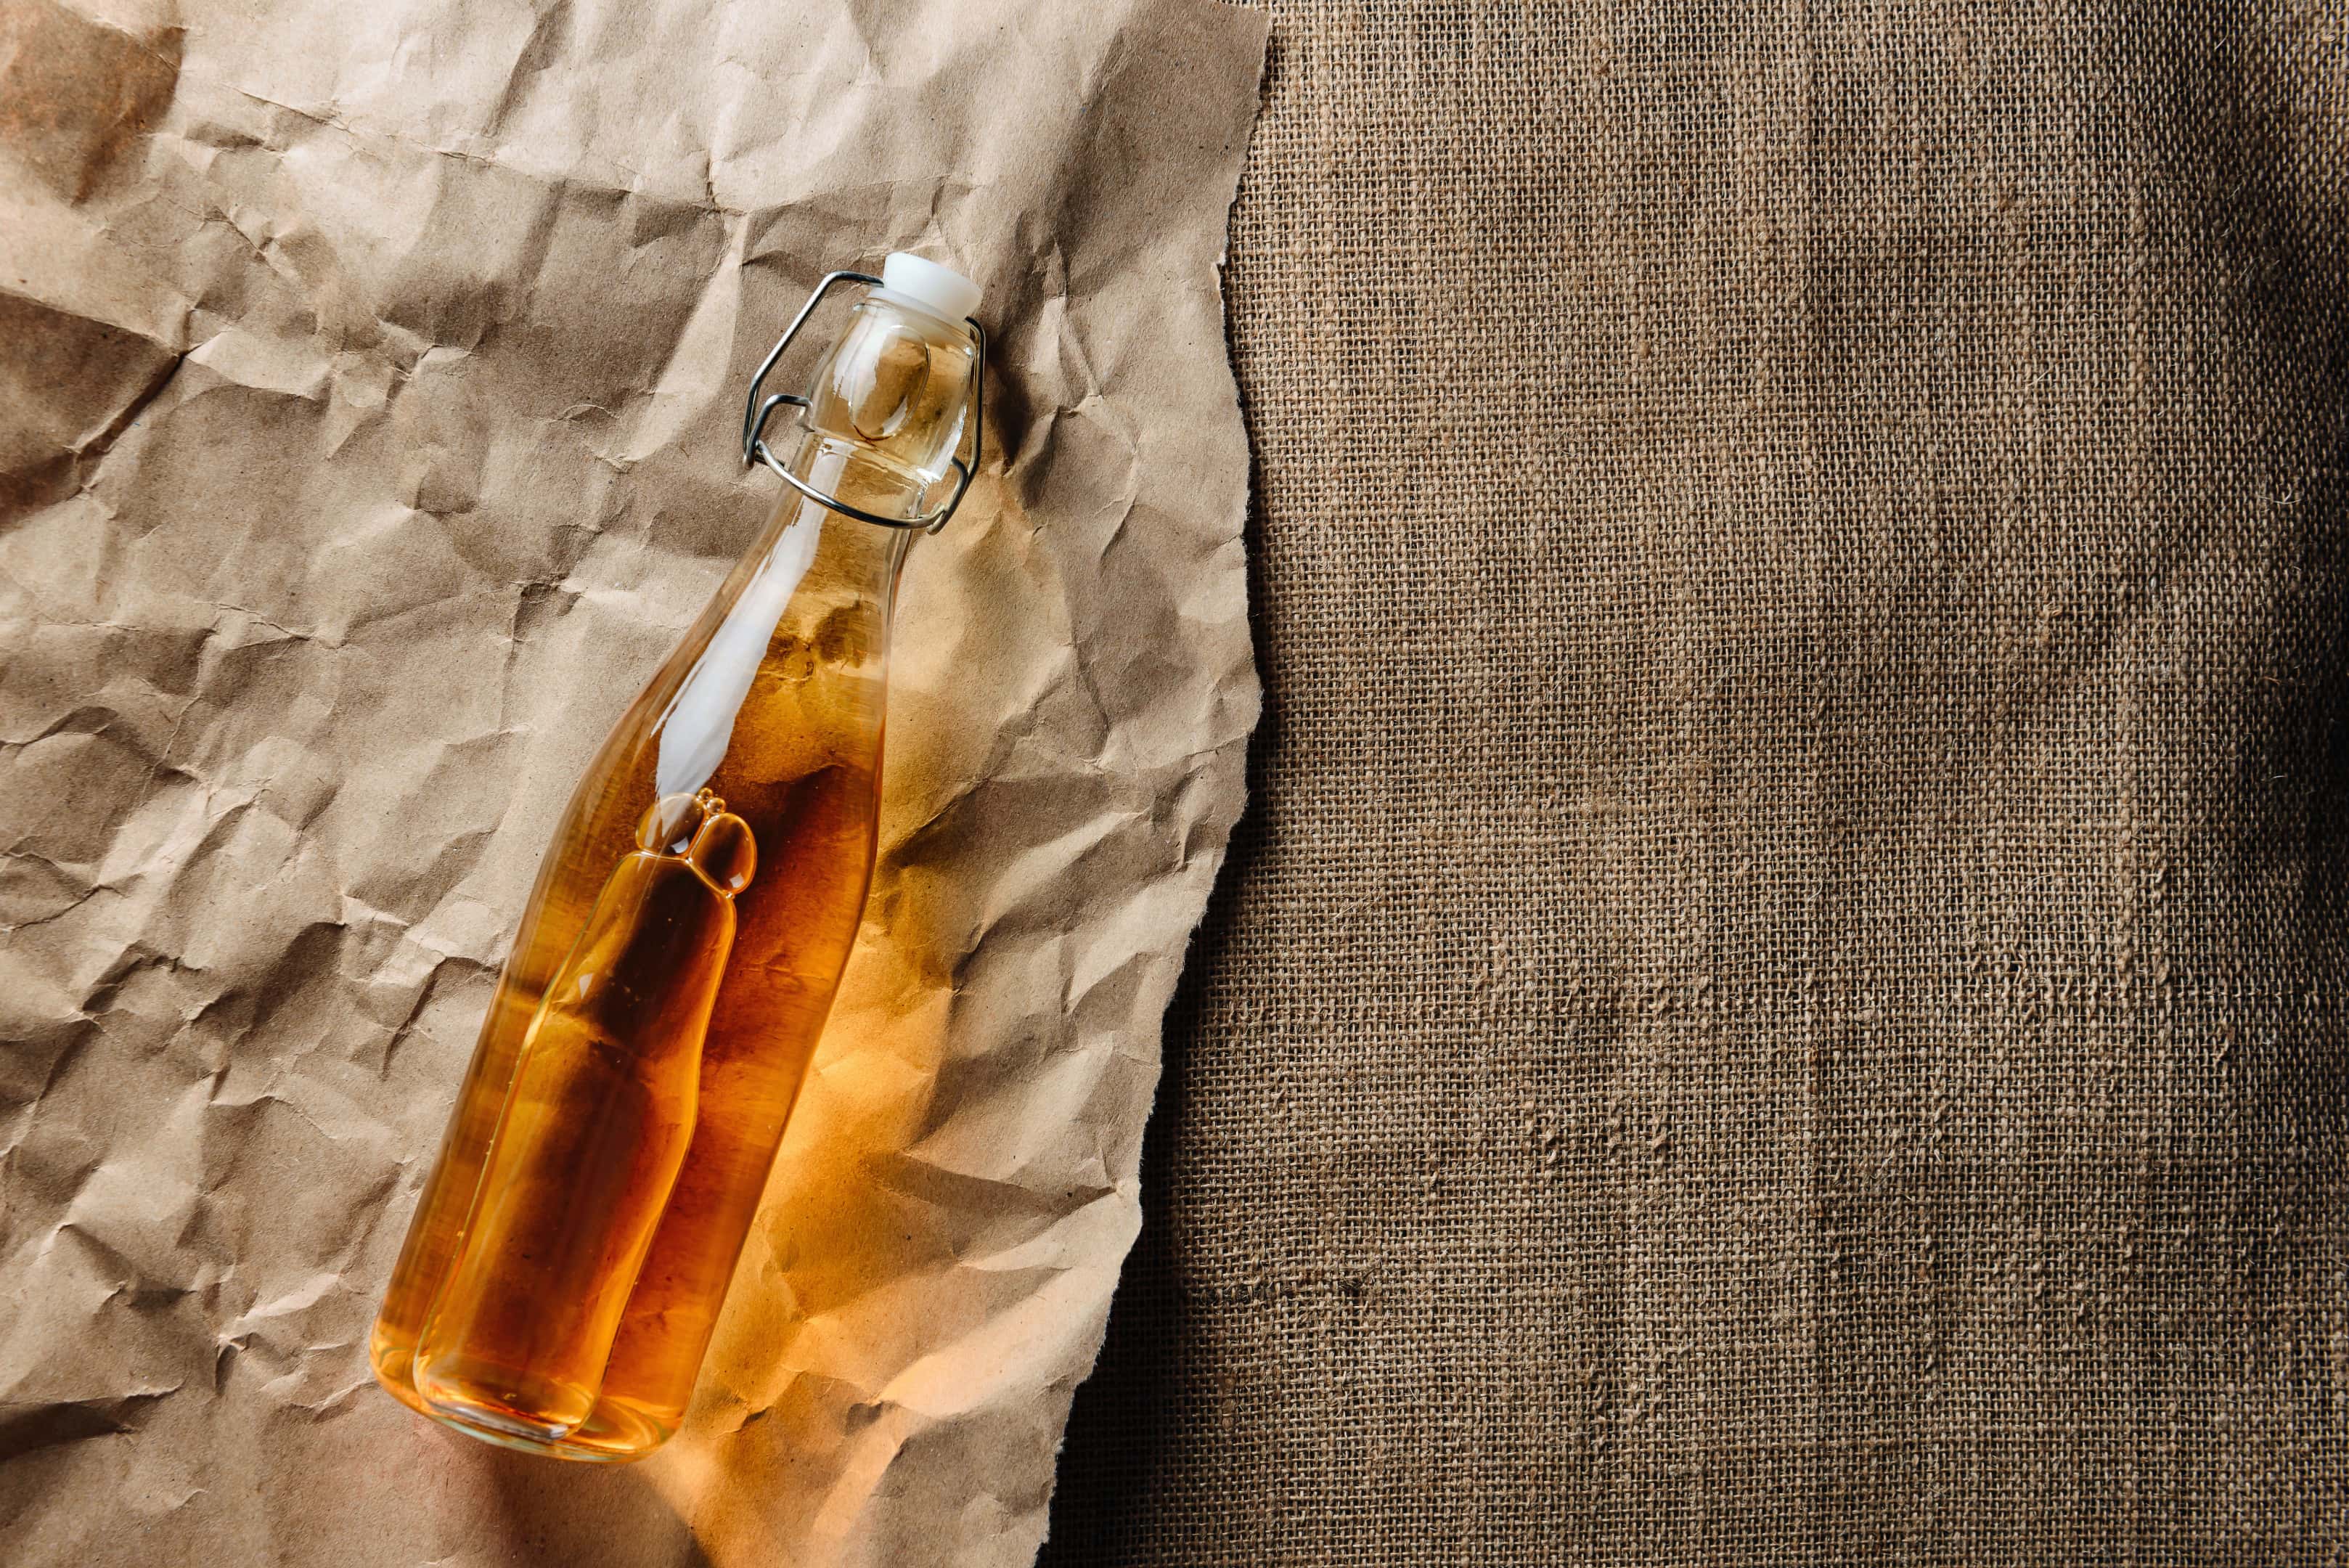 A bottle of homemade champagne vinegar lies on kraft paper